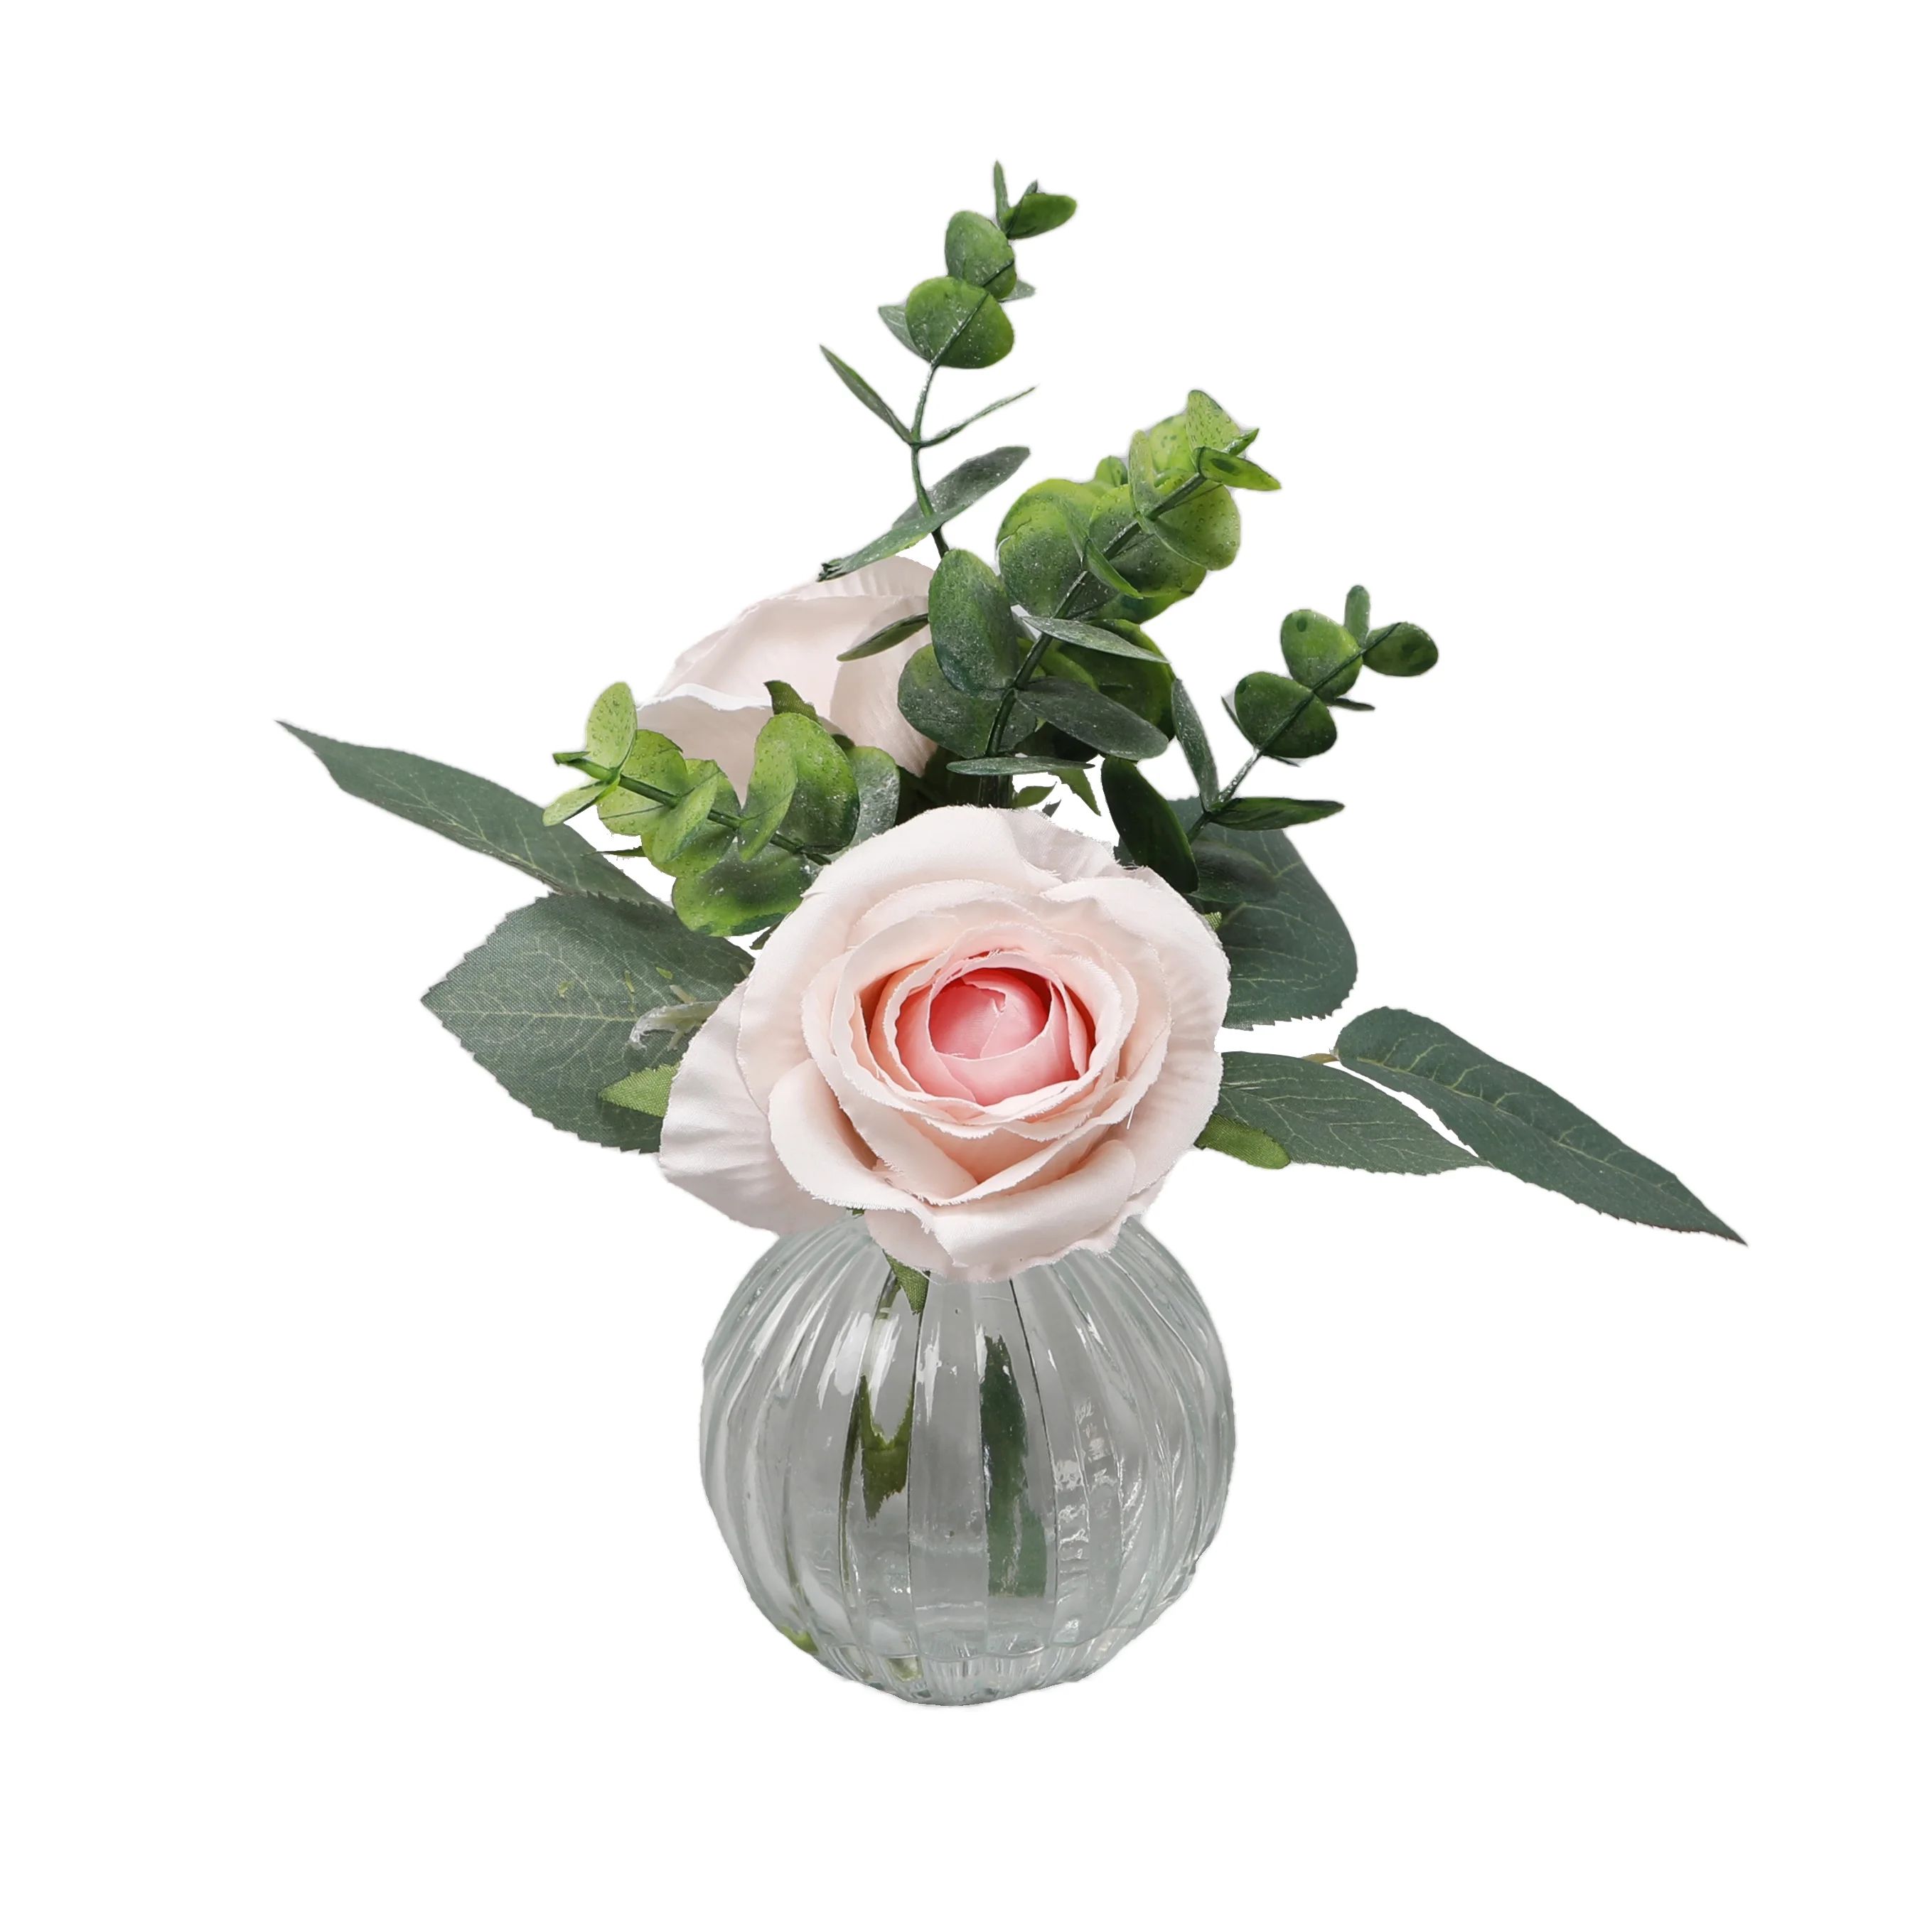 Mainstays 8" Tabletop Faux Rose Floral Arrangement in Glass Bud Vase, Clear | Walmart (US)